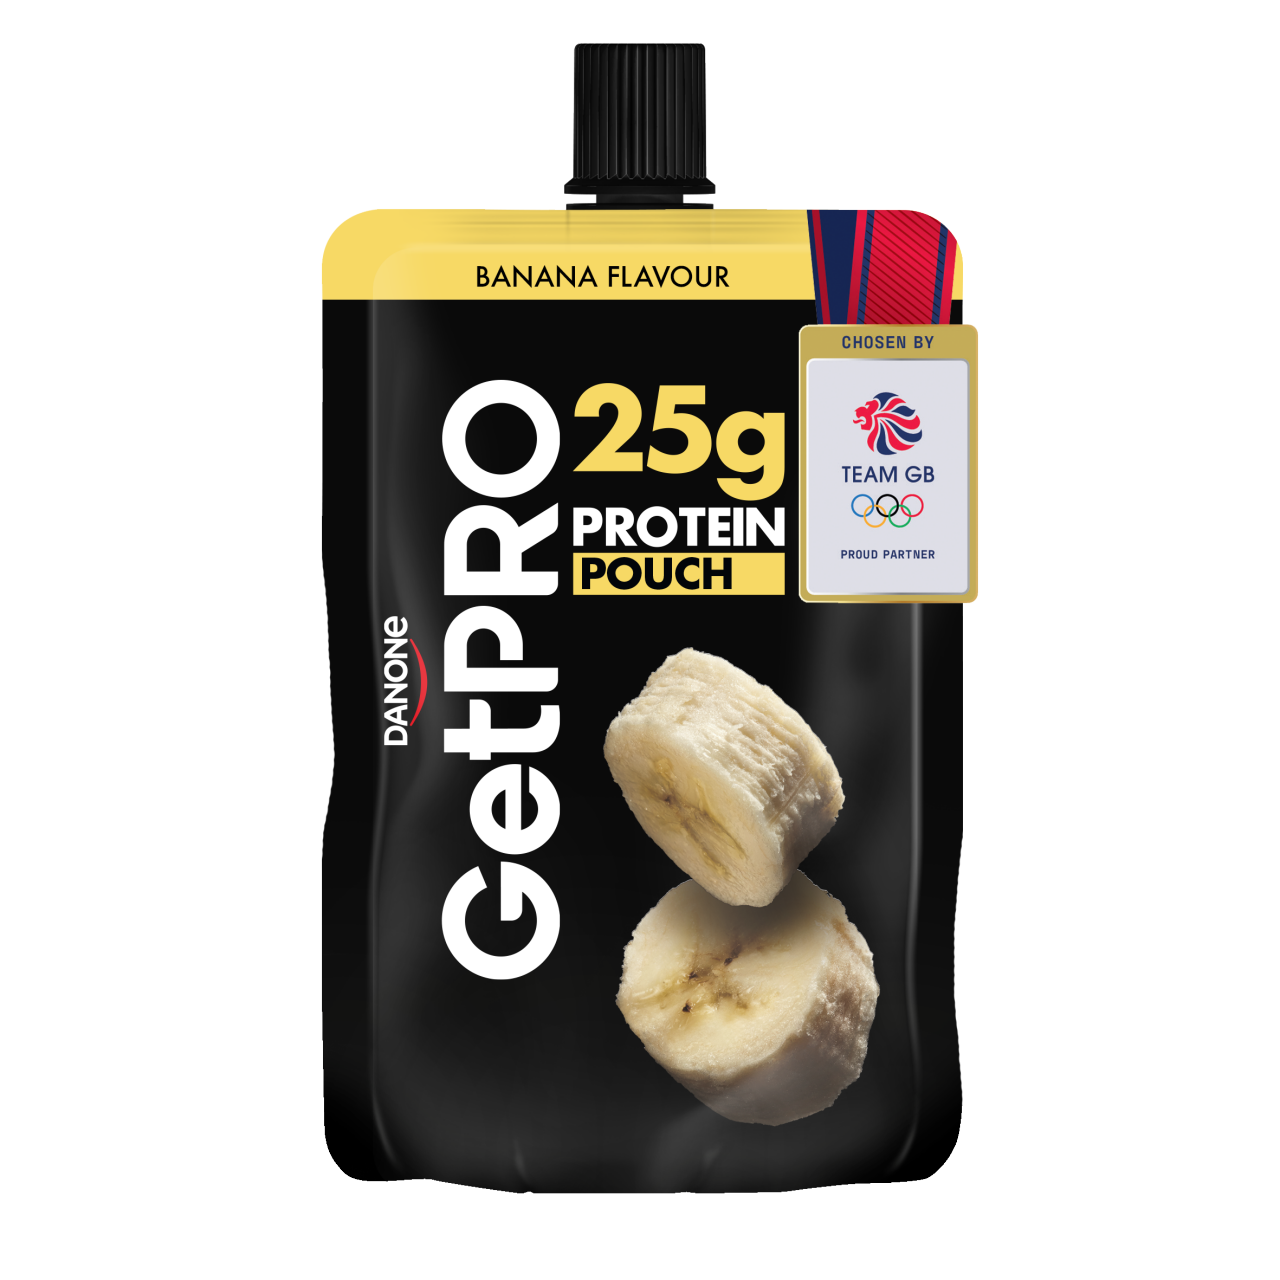 GetPRO Banana flavour protein pouch